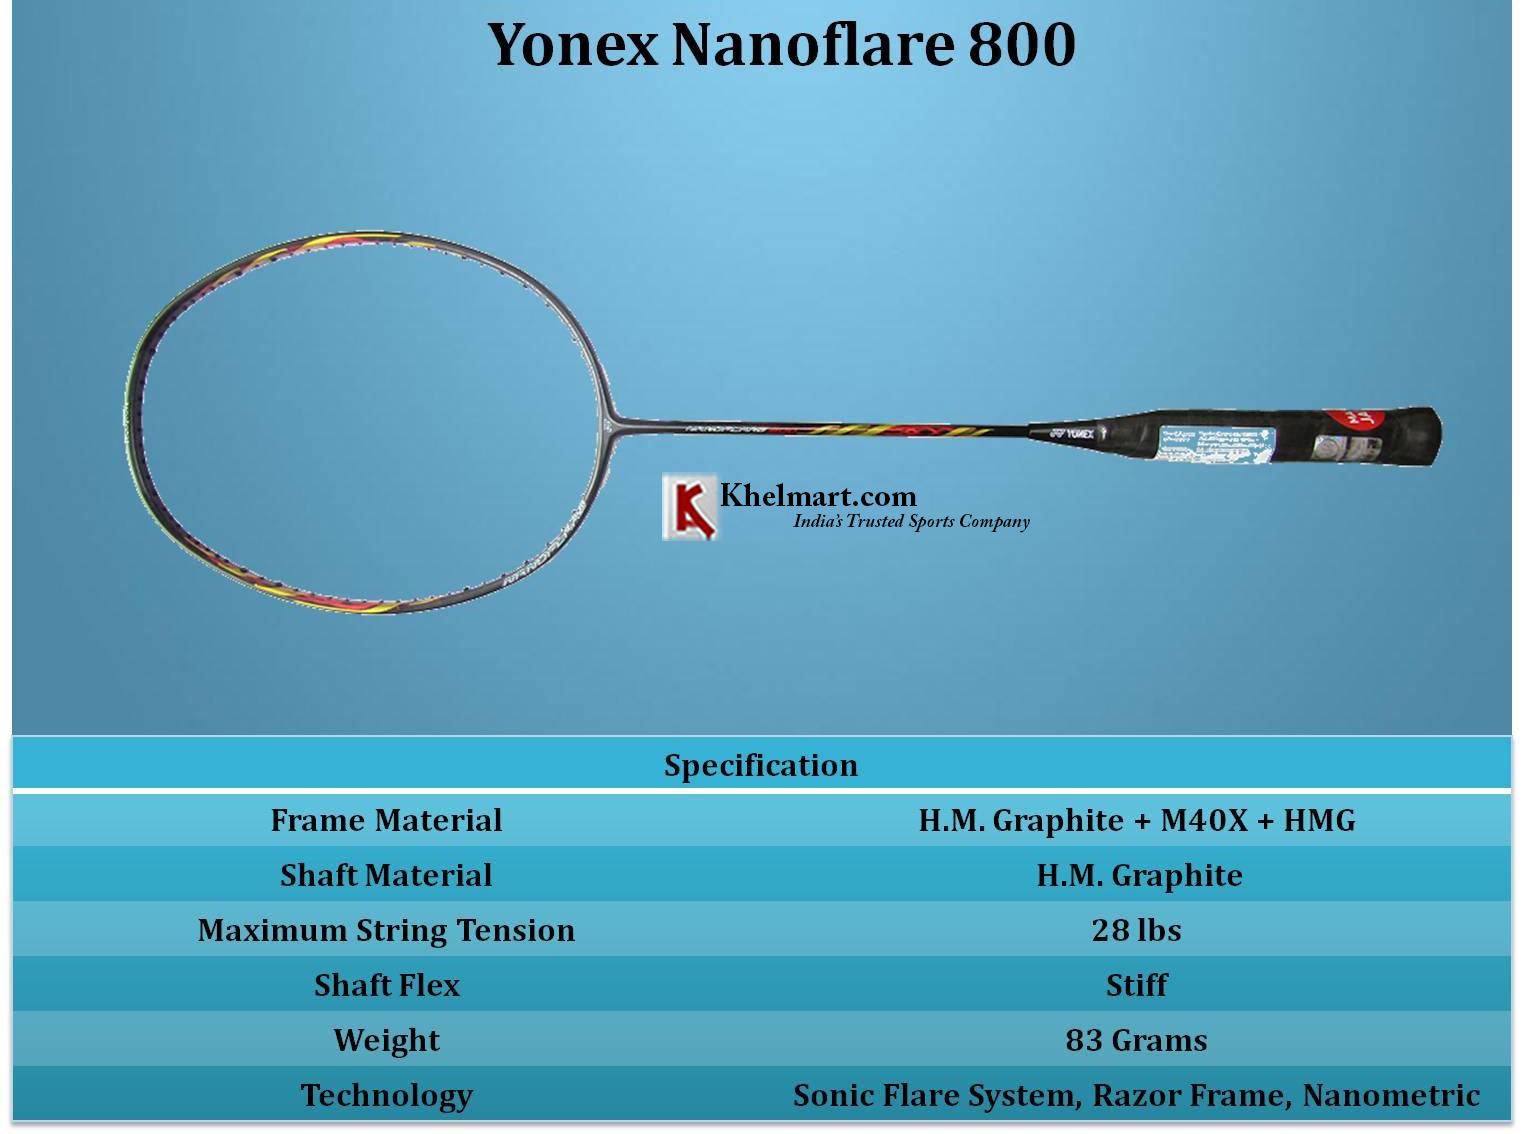 Yonex_Nanoflare_800_Specification_Khelmart_1